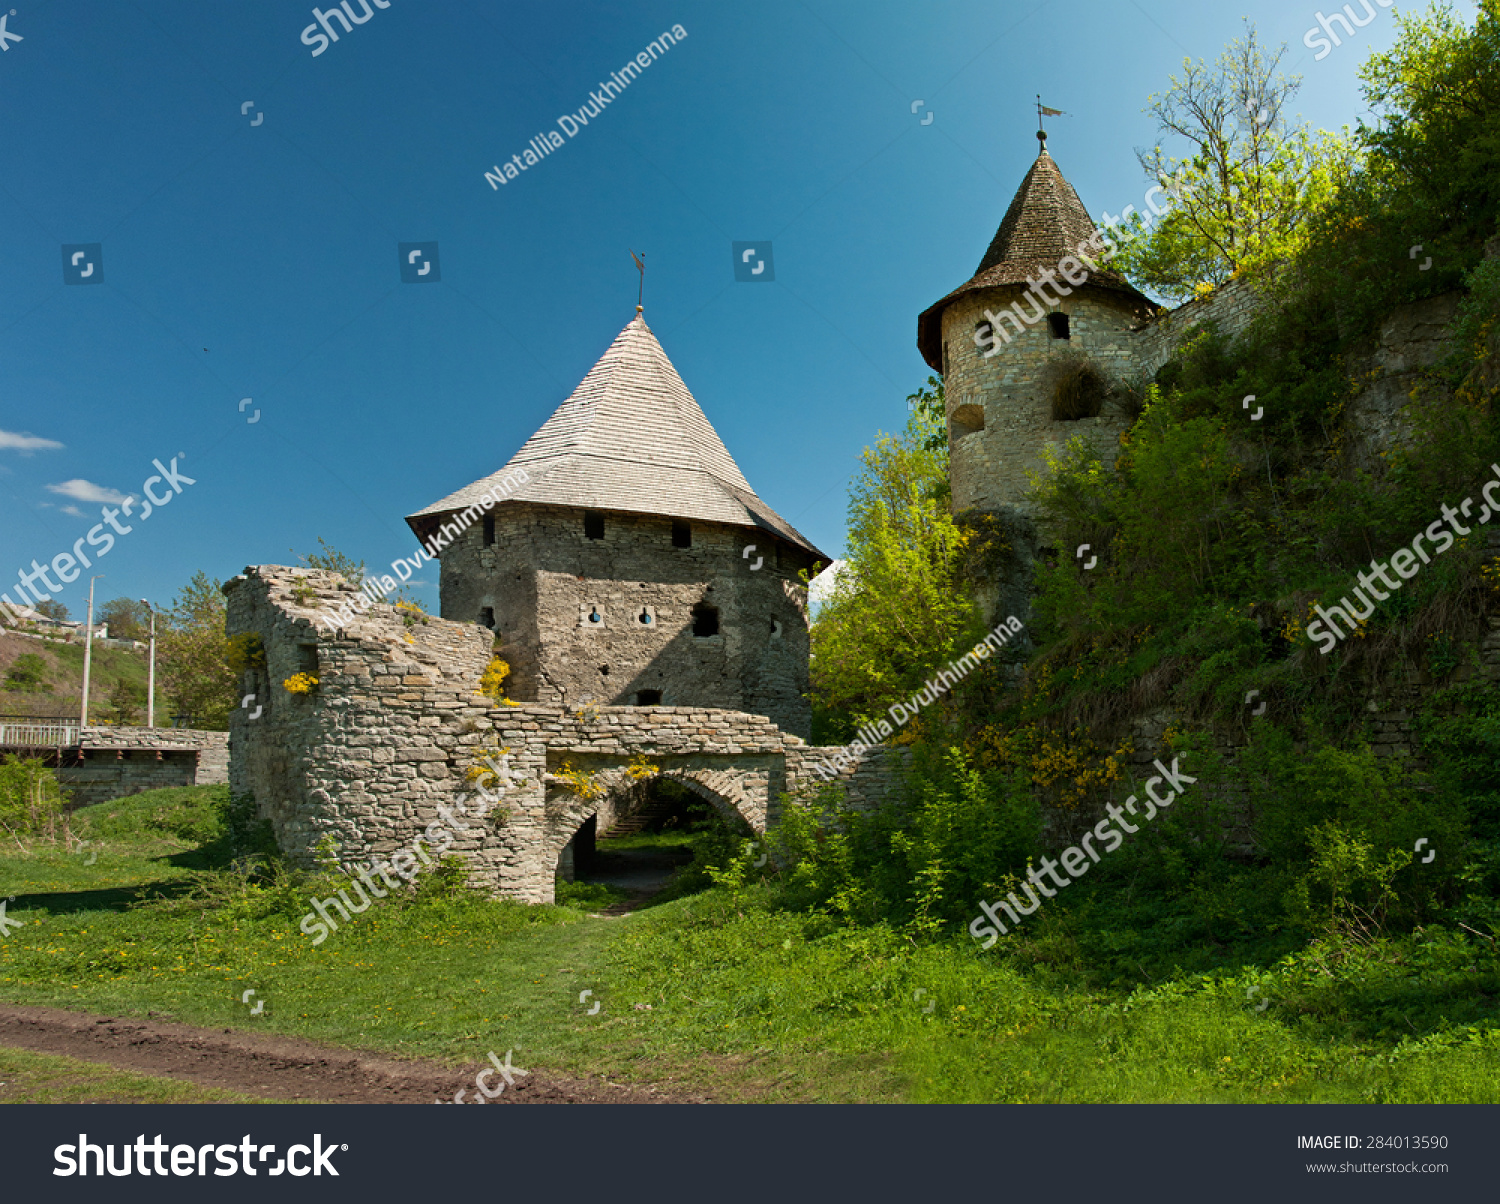 Old castle in Kamenetz-Podolsk in Ukraine #284013590